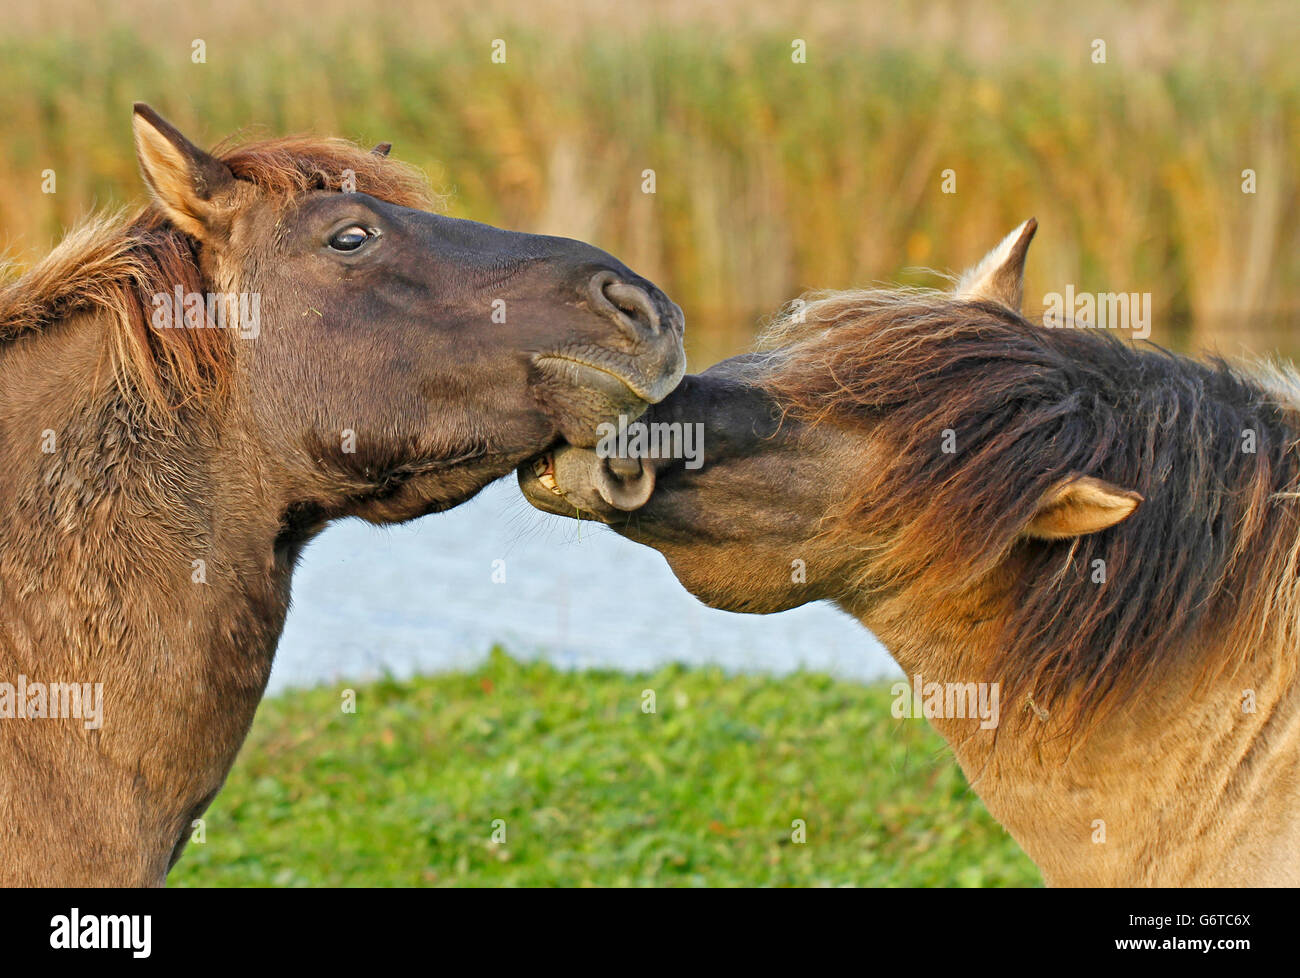 Konik cavalli selvaggi in Oostvaardersplassen riserva naturale in Olanda. Foto Stock